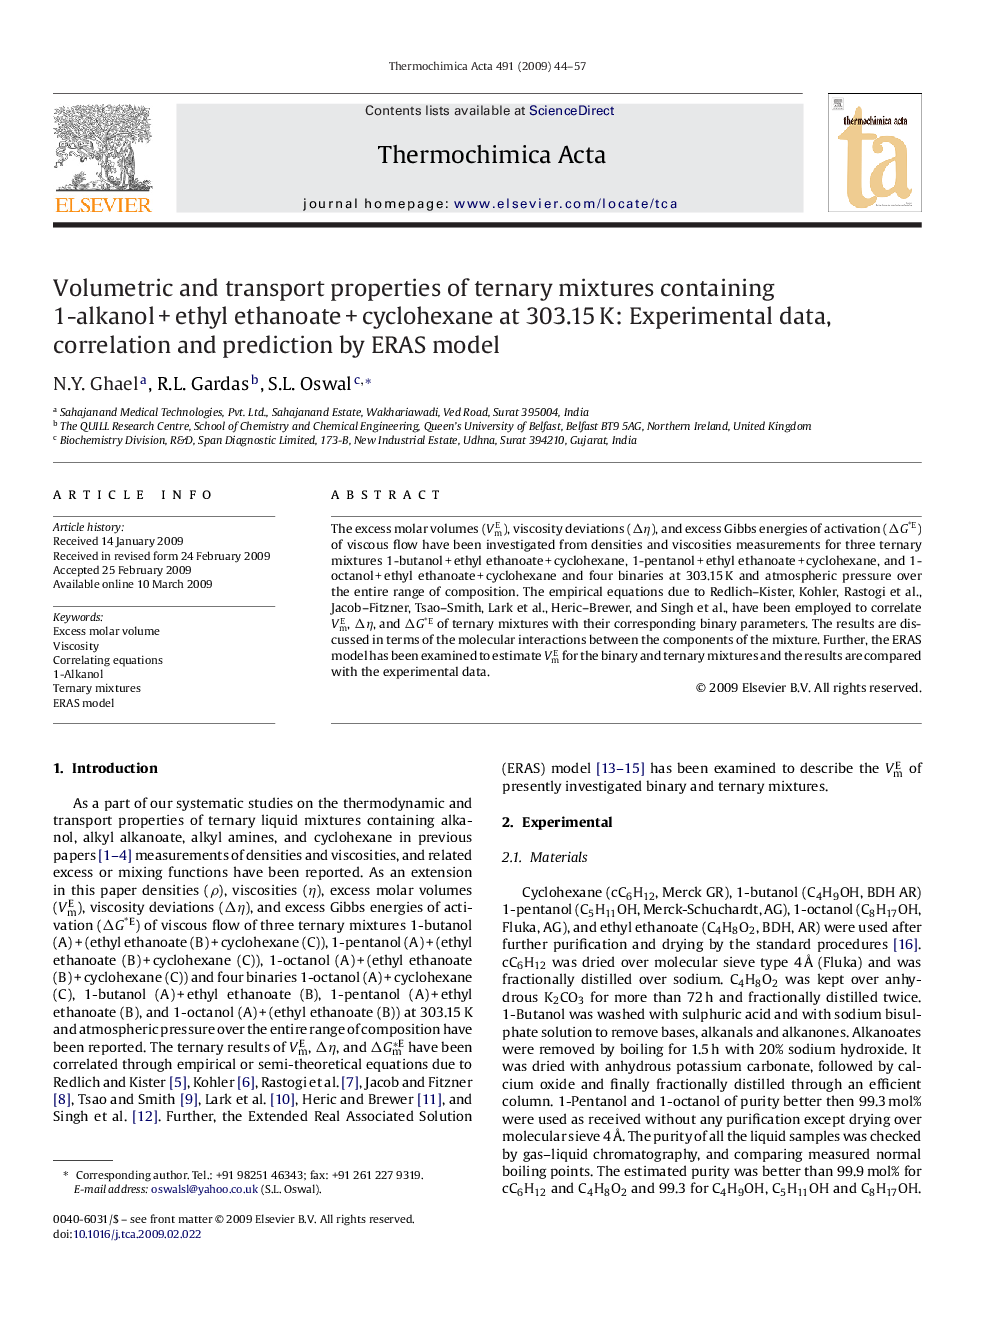 Volumetric and transport properties of ternary mixtures containing 1-alkanolÂ +Â ethyl ethanoateÂ +Â cyclohexane at 303.15Â K: Experimental data, correlation and prediction by ERAS model